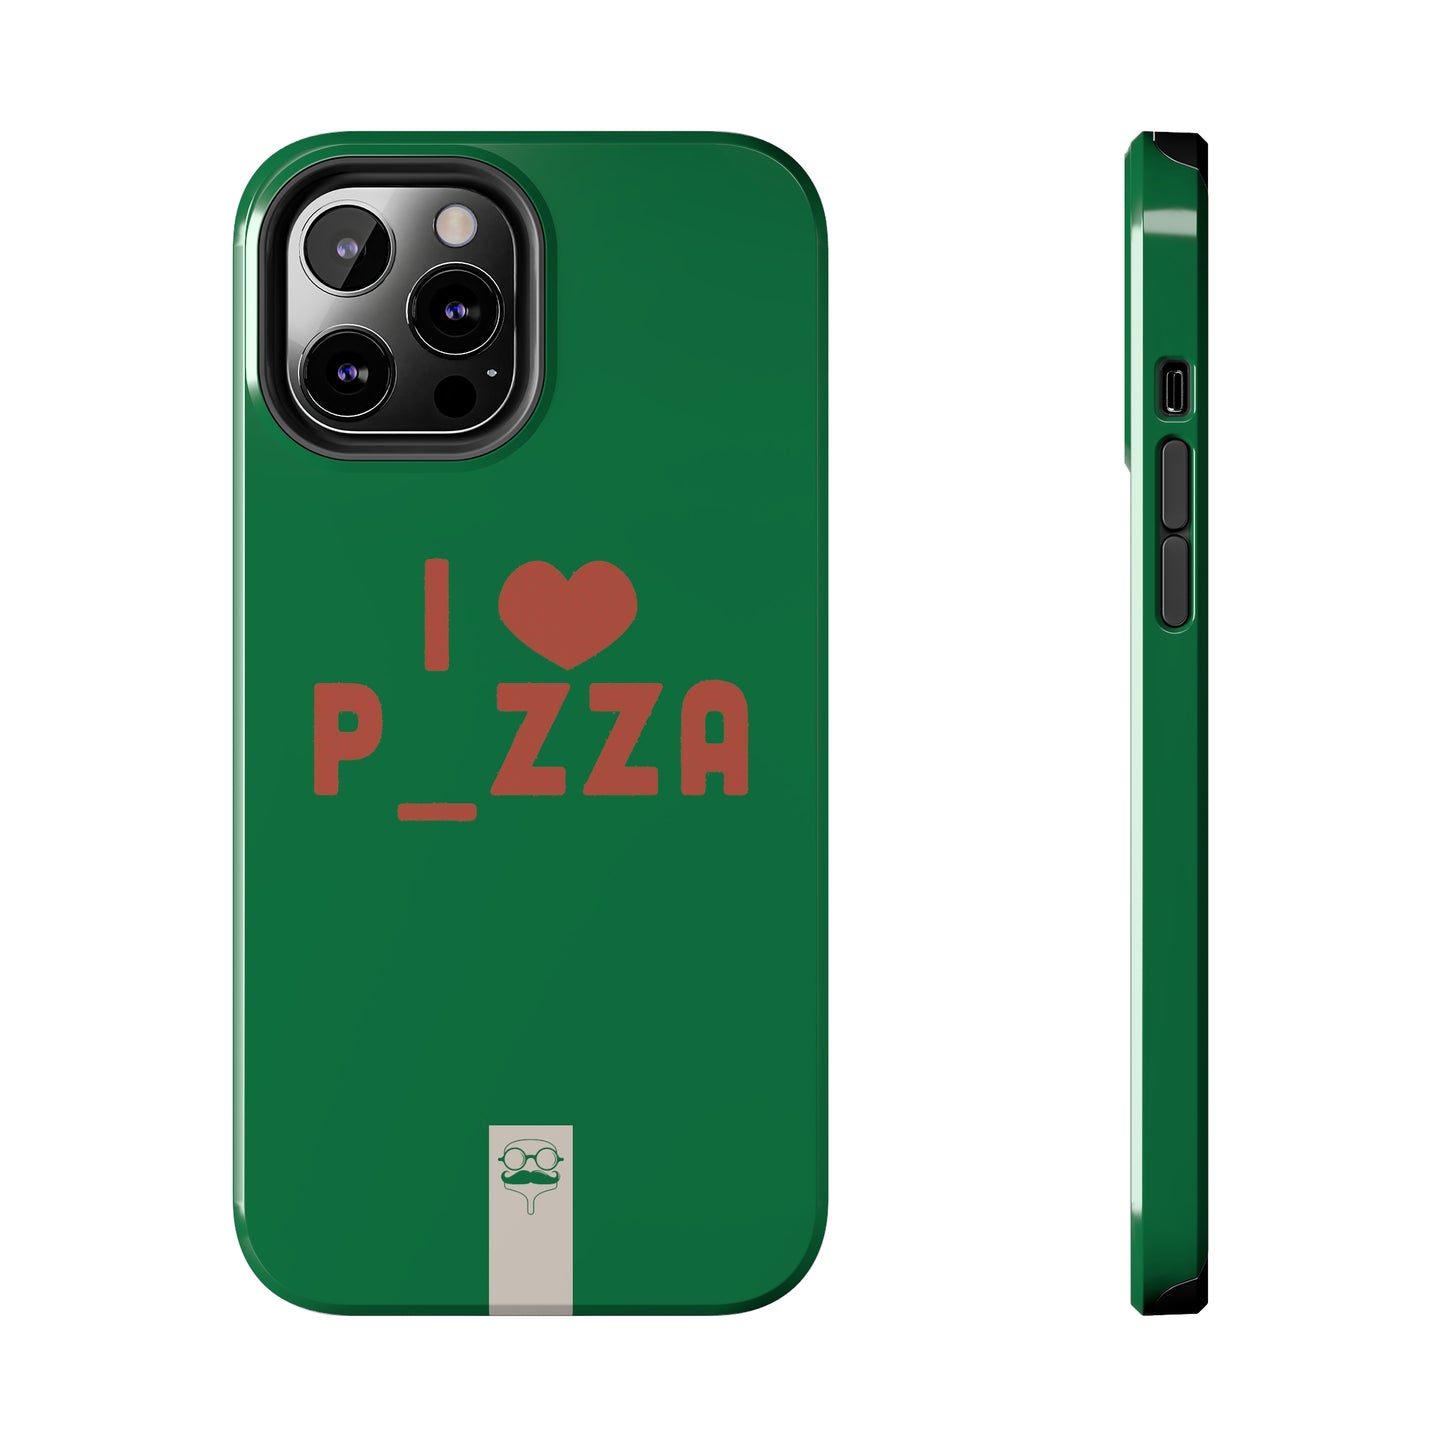 I Love P_ZZA - Tough iPhone Cases